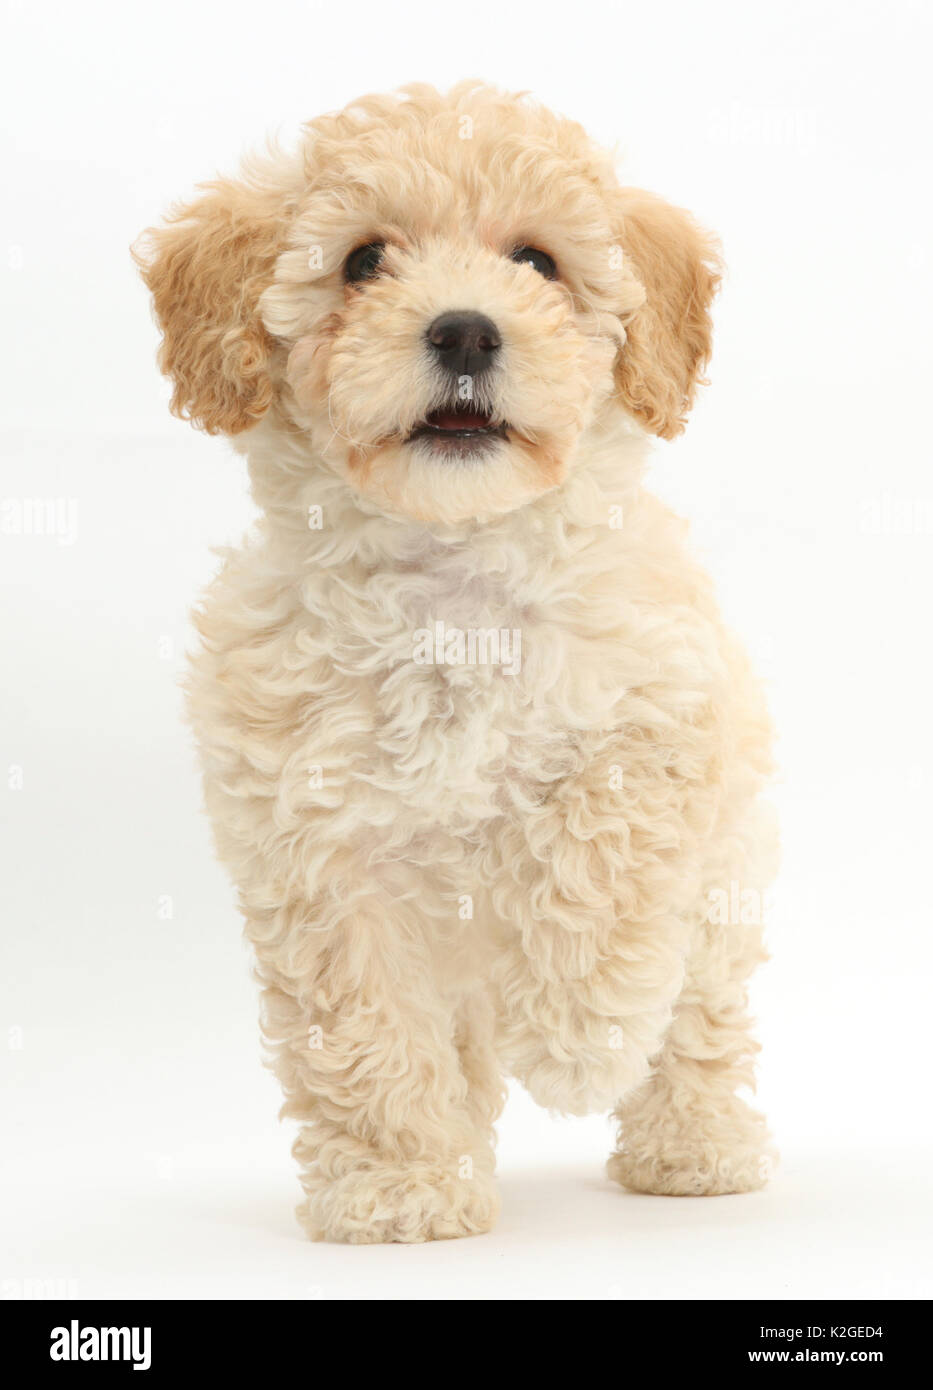 Poochon puppy, Bichon Frise cross Poodle, age 6 weeks Stock Photo - Alamy